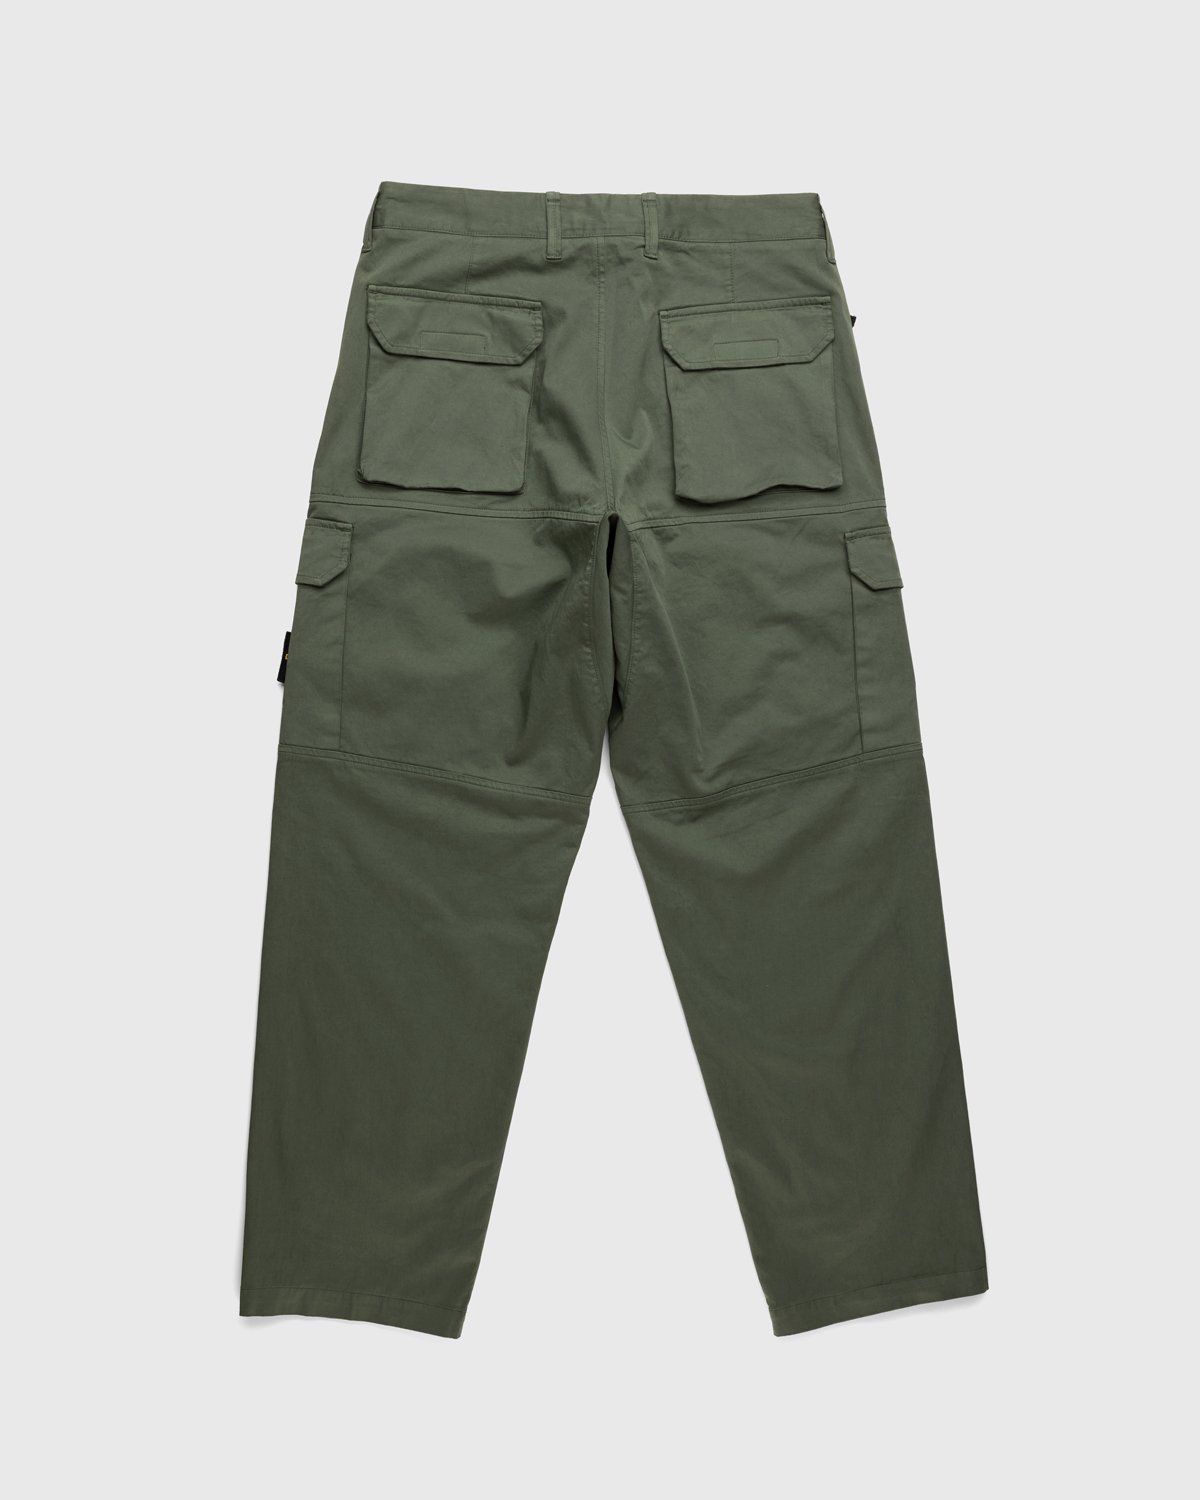 Stone Island – Pants Green - Cargo Pants - Green - Image 2